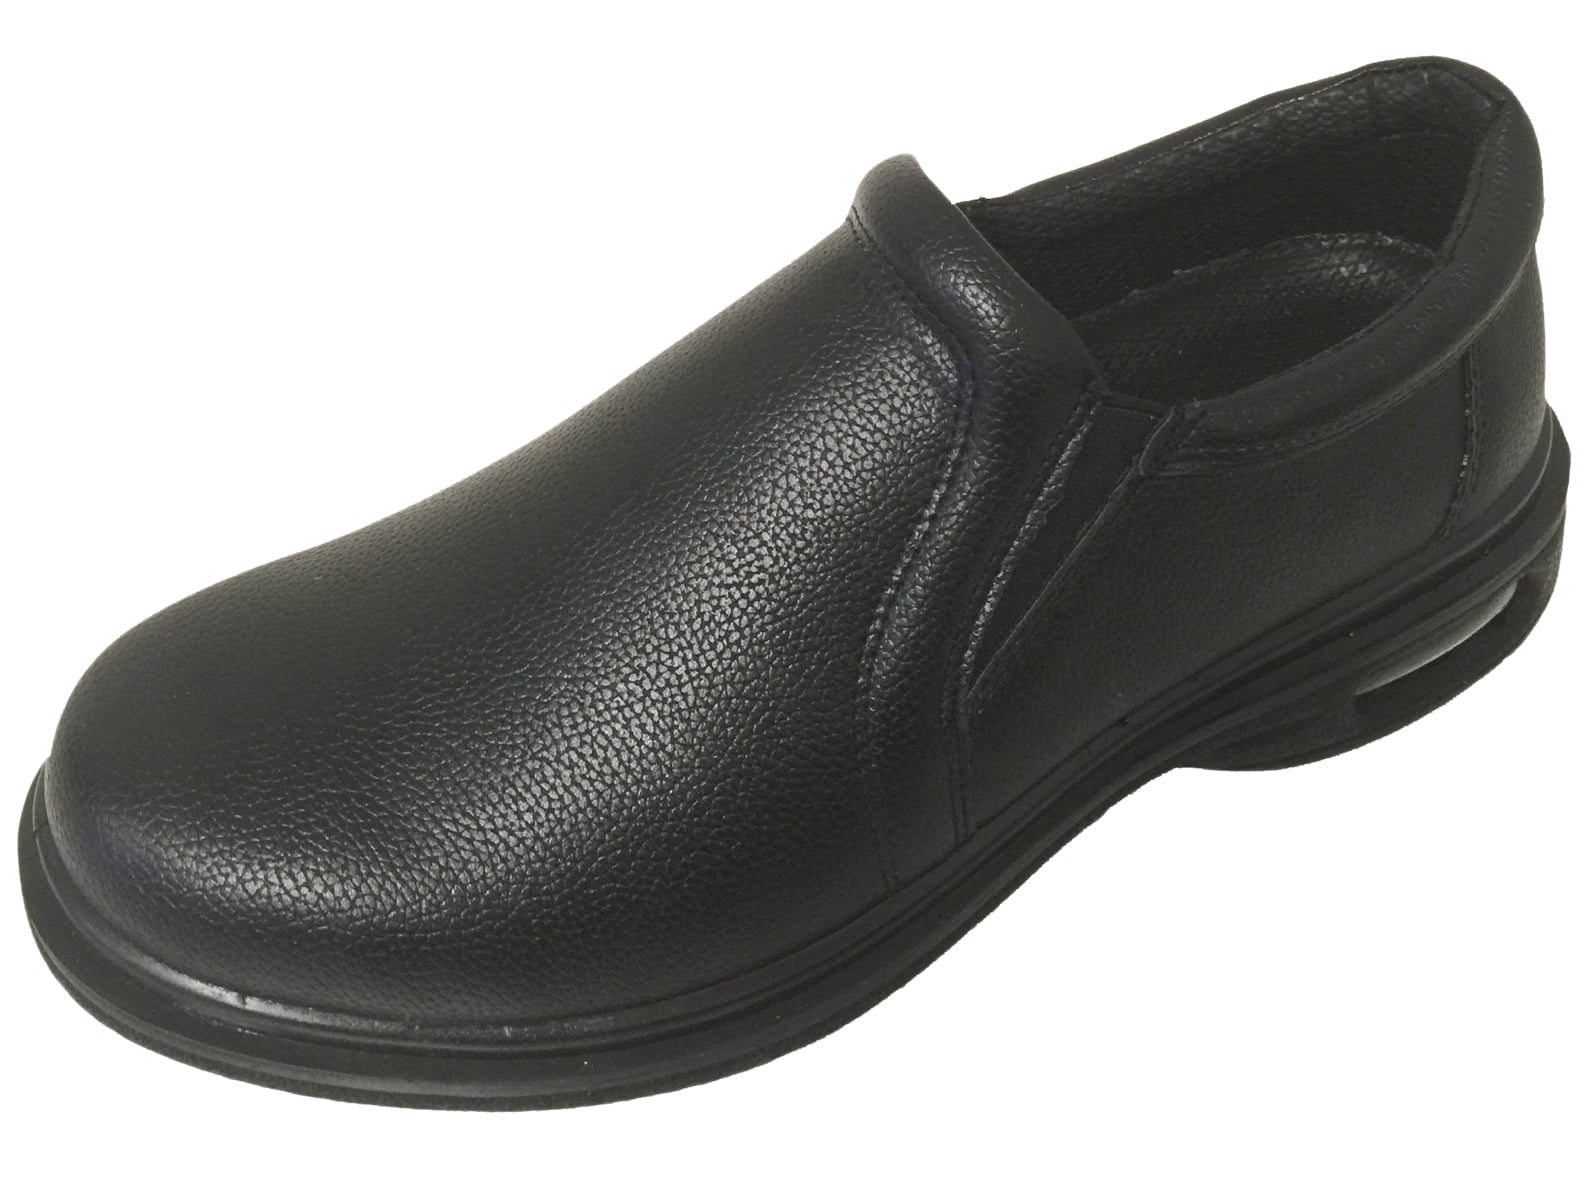 Dr Keller Rick Full Fit Smart Comfort Padded Slip On Loafers Shoes Black 